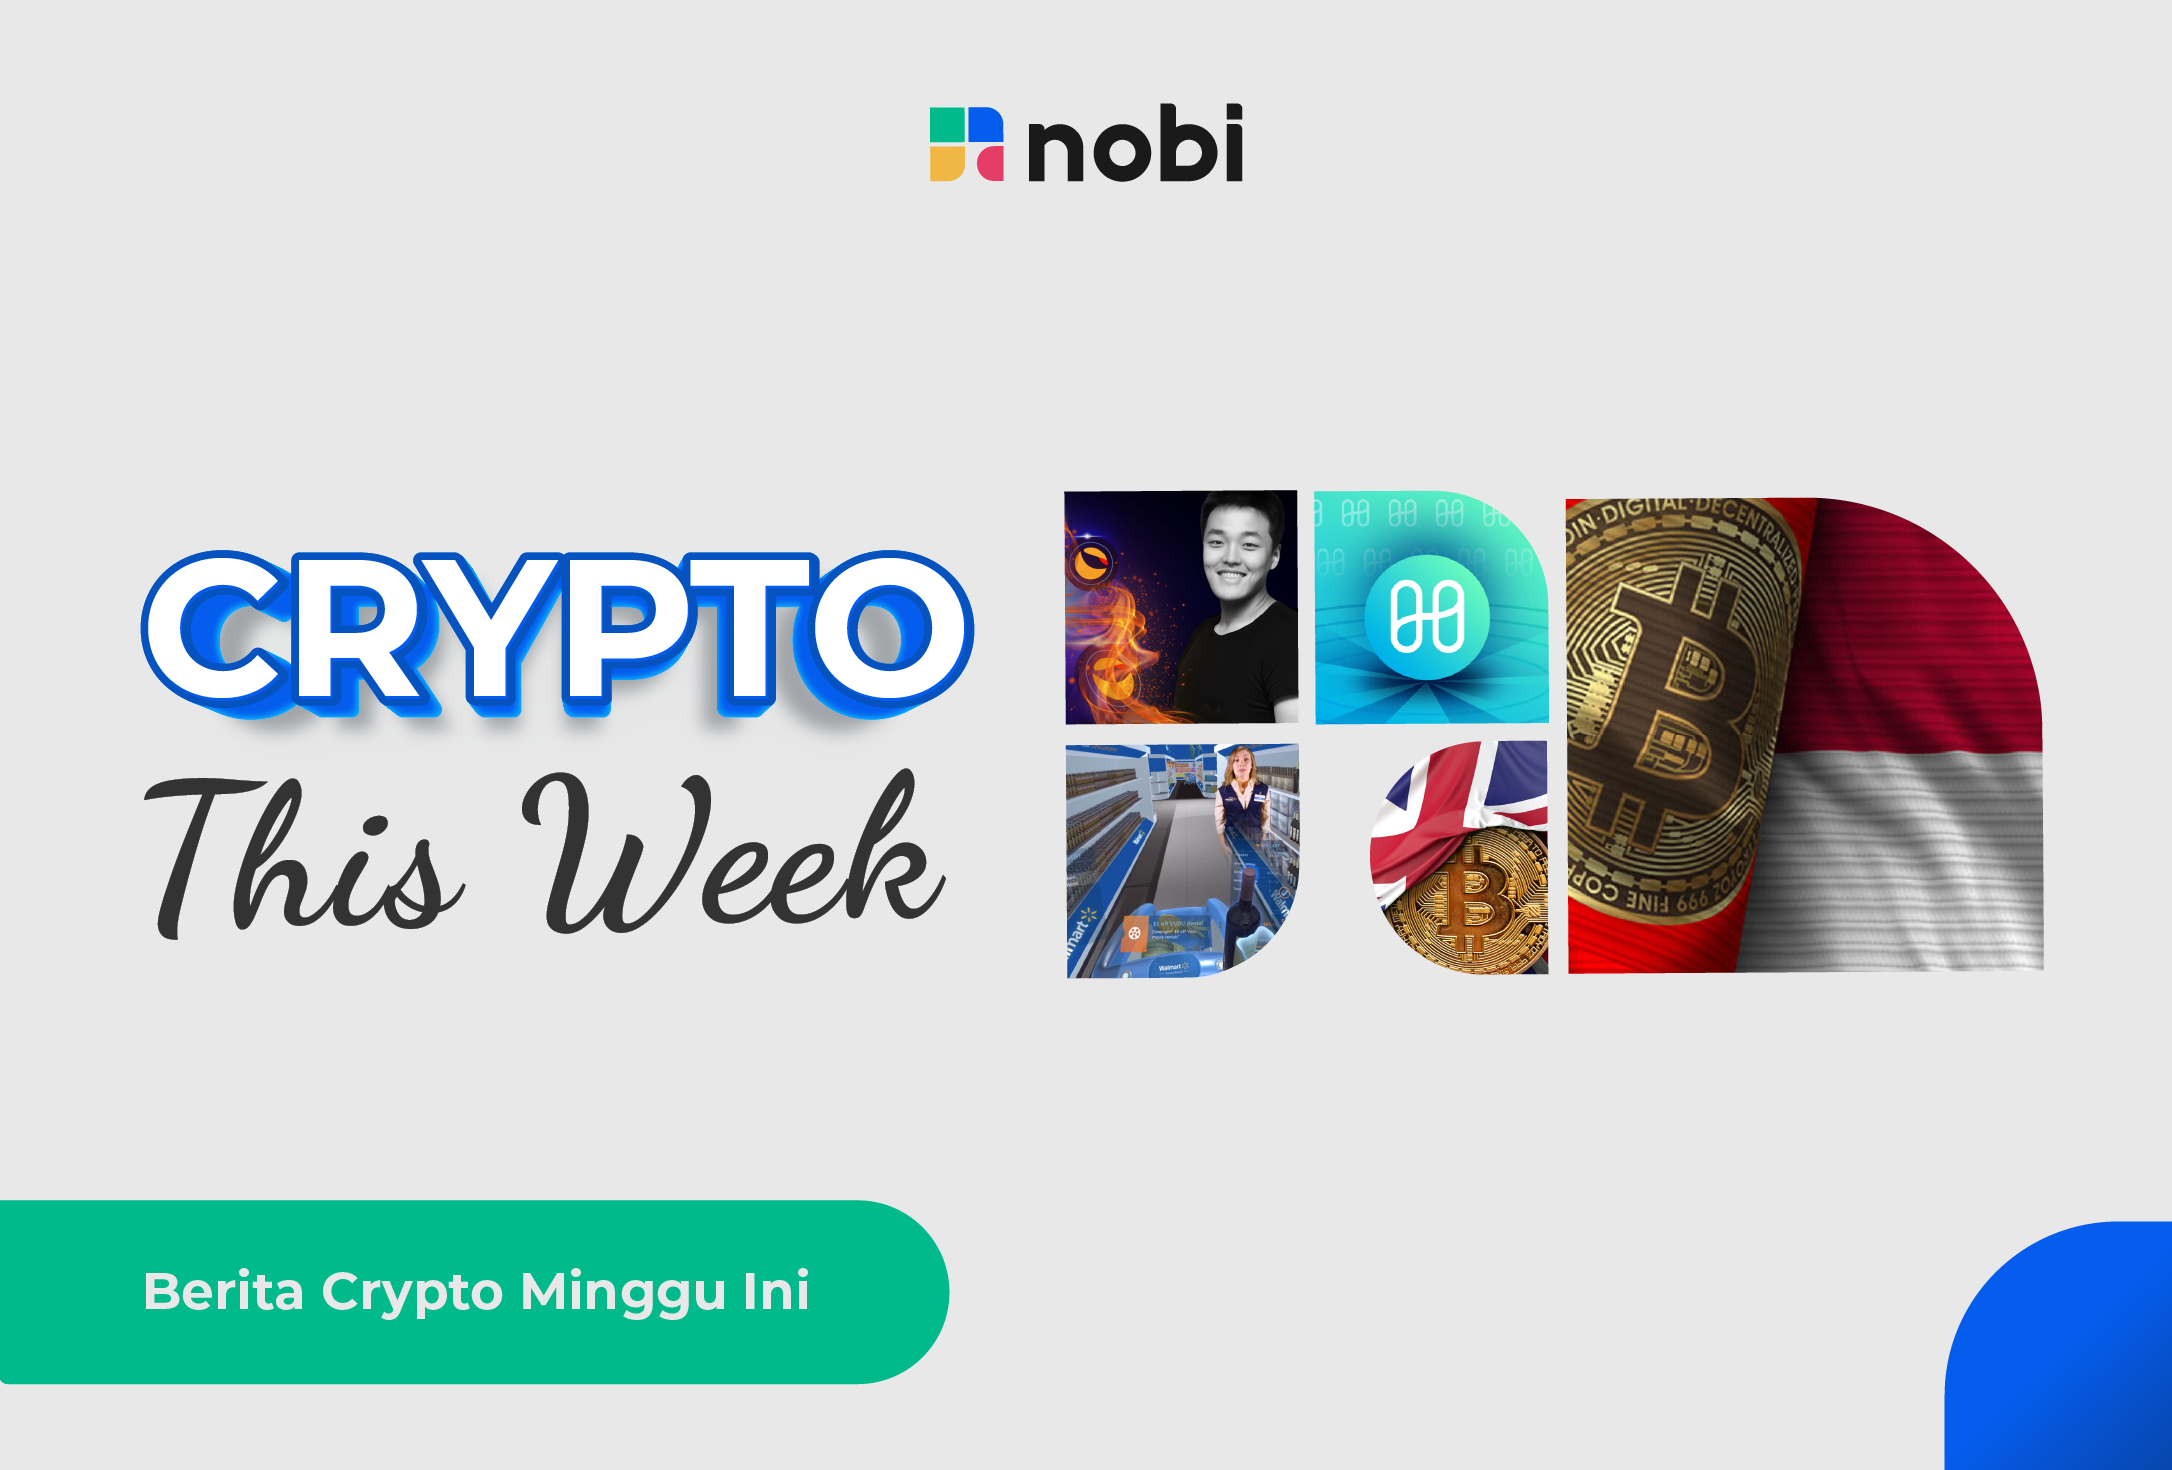 Crypto This Week: Crypto & NOBI News This Week